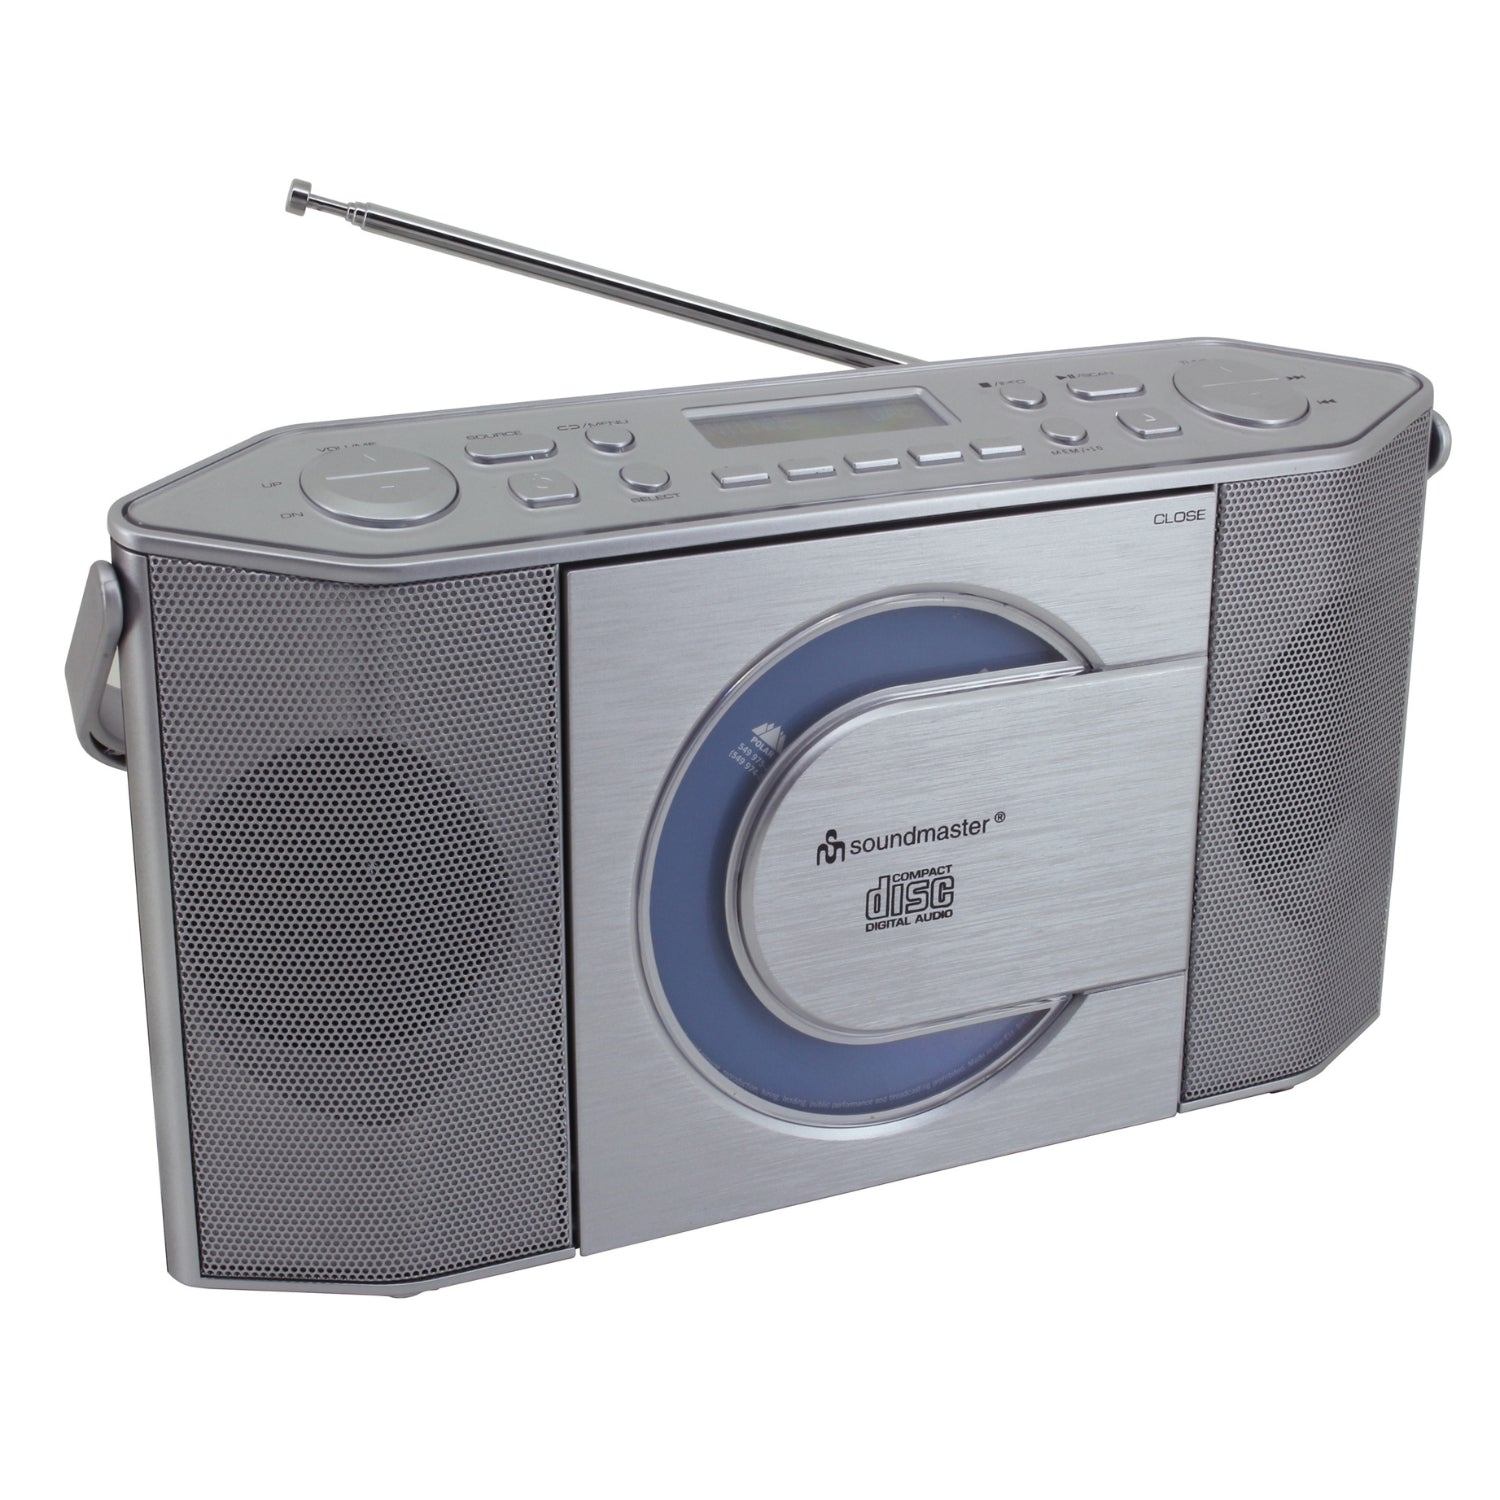 B-WARE Soundmaster RCD1770SI Digitalradio Radiorecorder DAB+ mit USB und CD-Player MP3 Kopfhörer Uhr